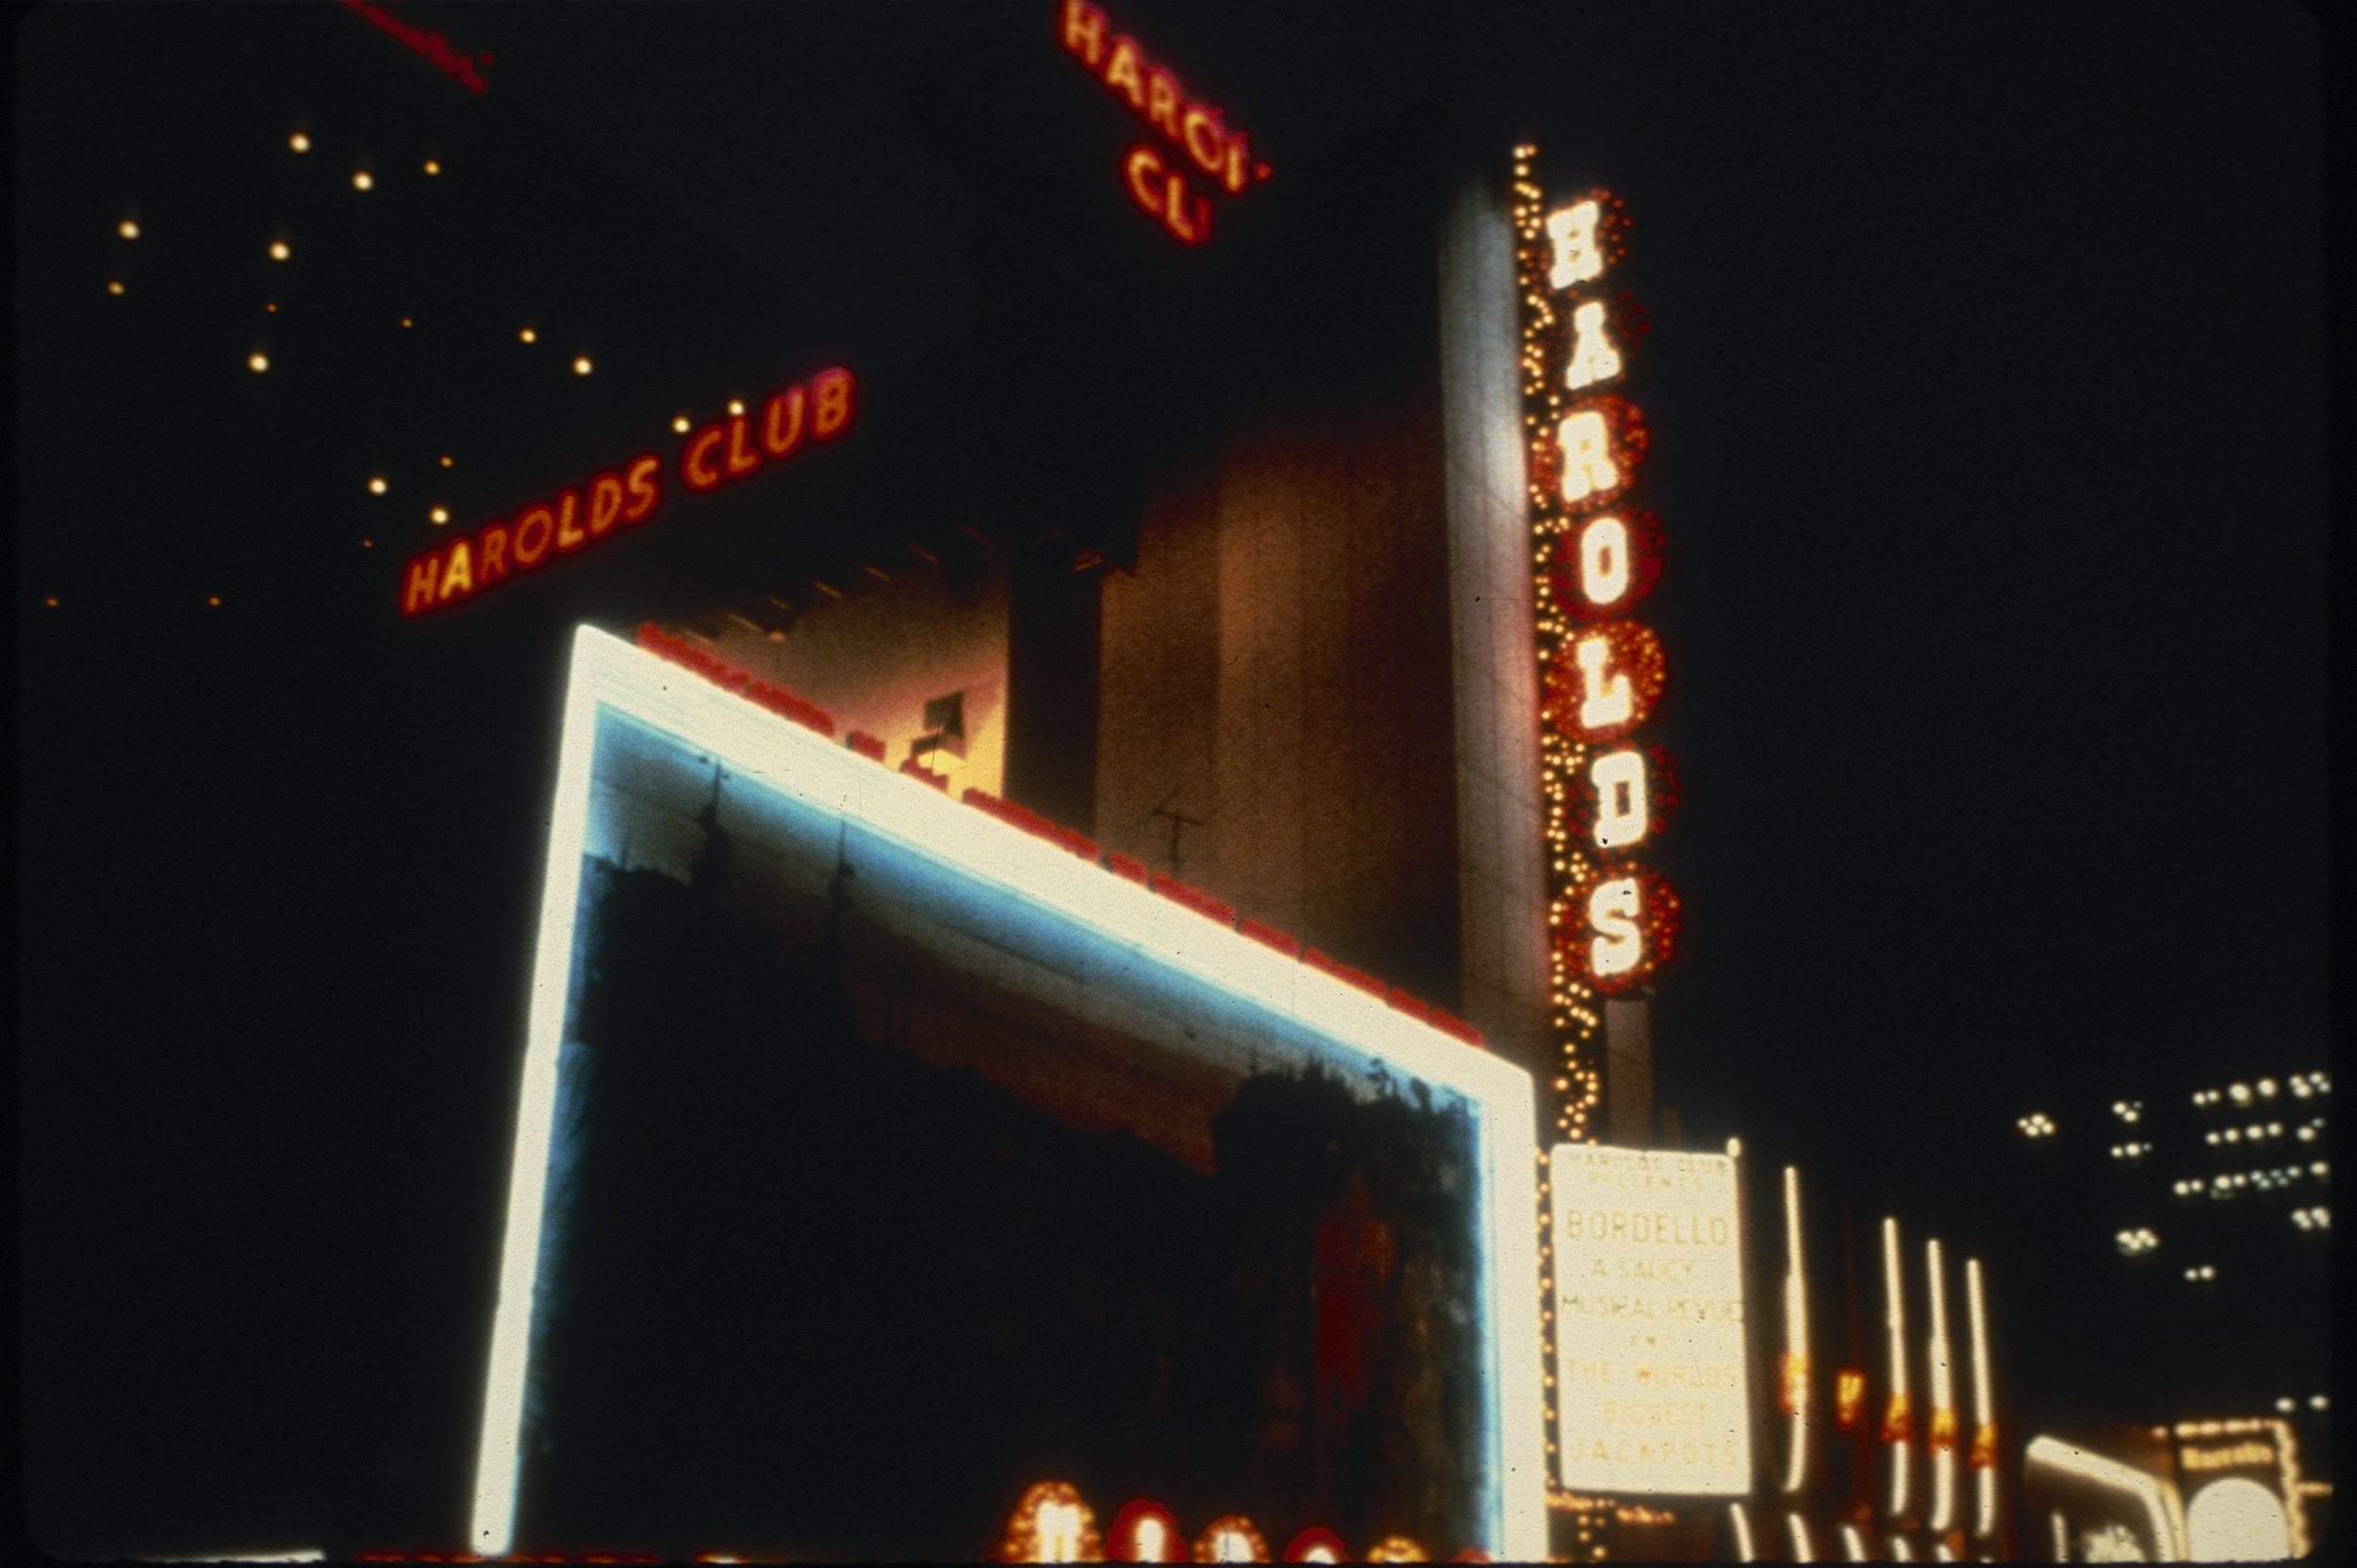 Slide of Harold's Club, Reno, Nevada, 1986